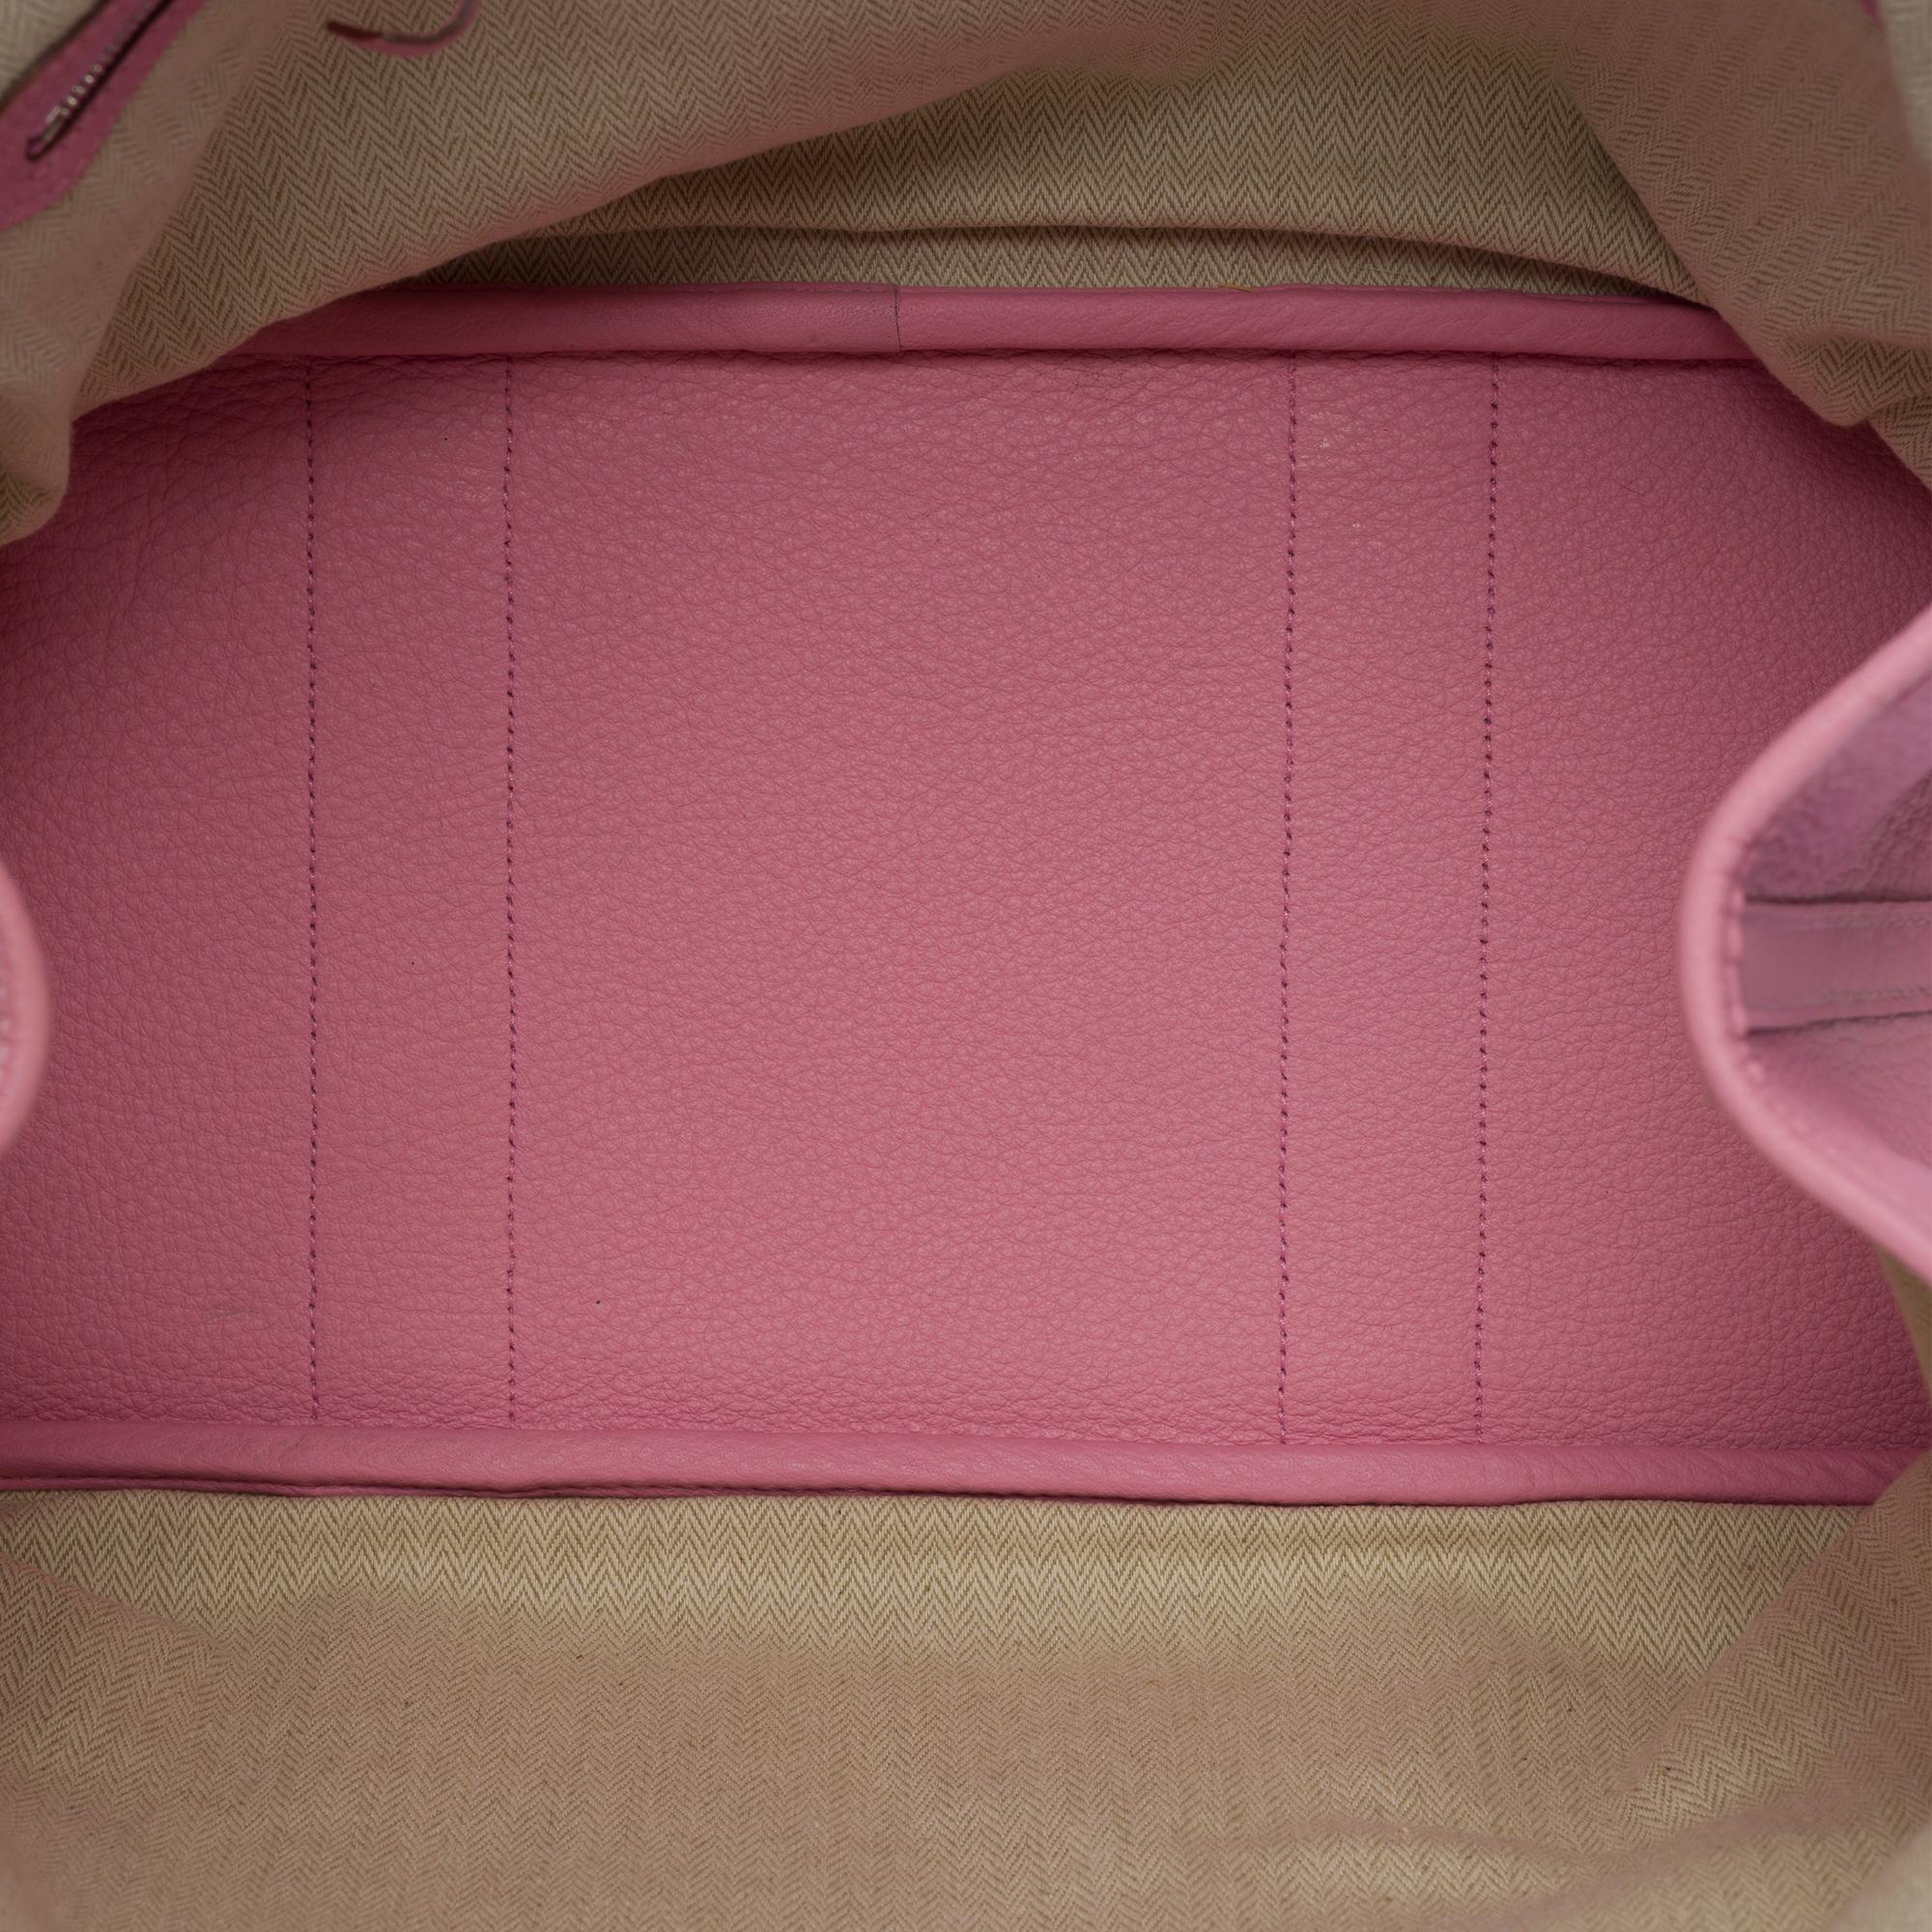 Gorgeous Hermès Garden Party 36 Tote bag in Sakura Pink Negonda leather, SHW 3